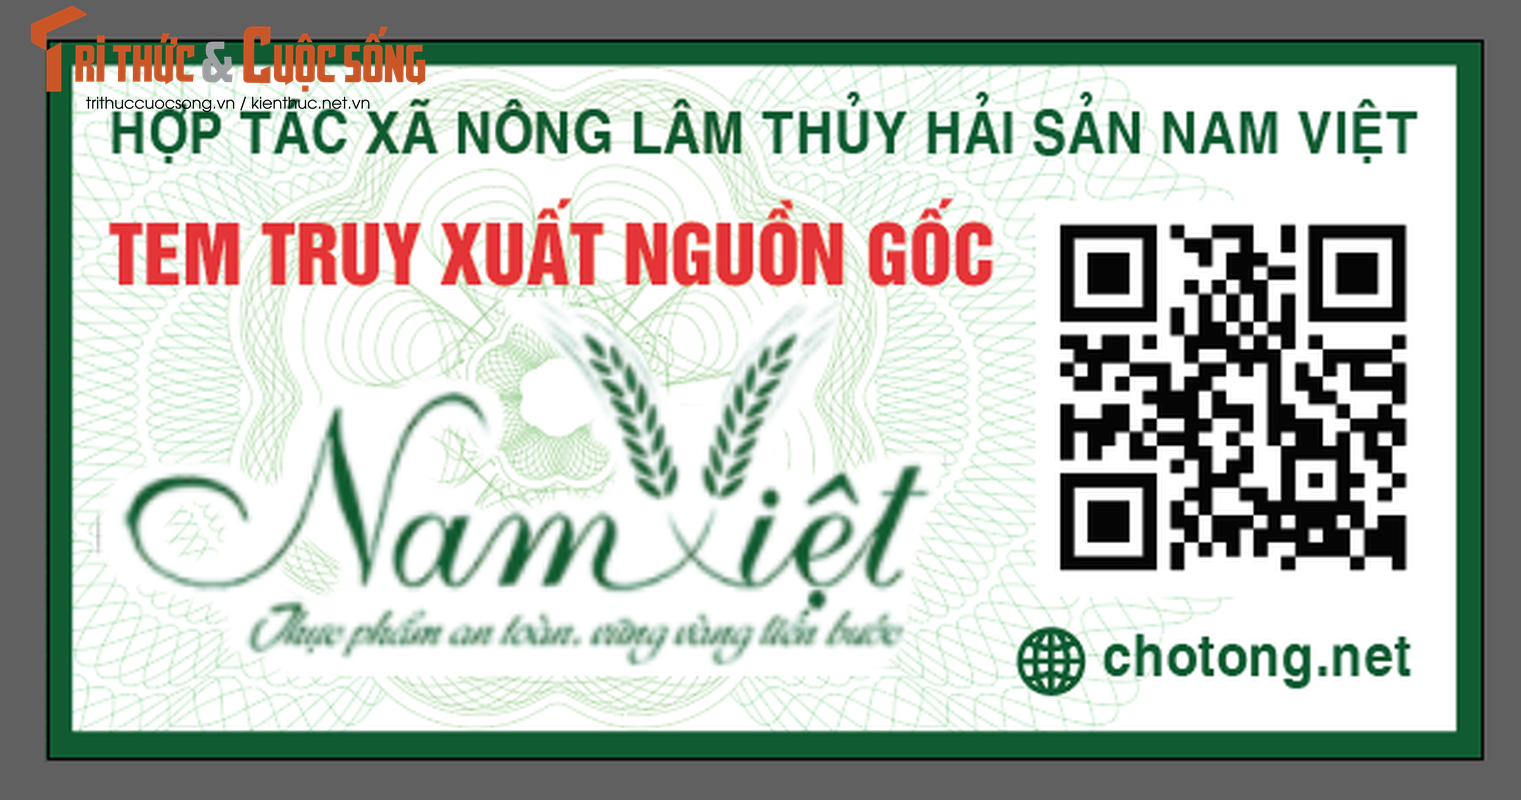 Nam giang vien nghi day ve lam nong nghiep sach, thu hang chuc ty moi nam-Hinh-5